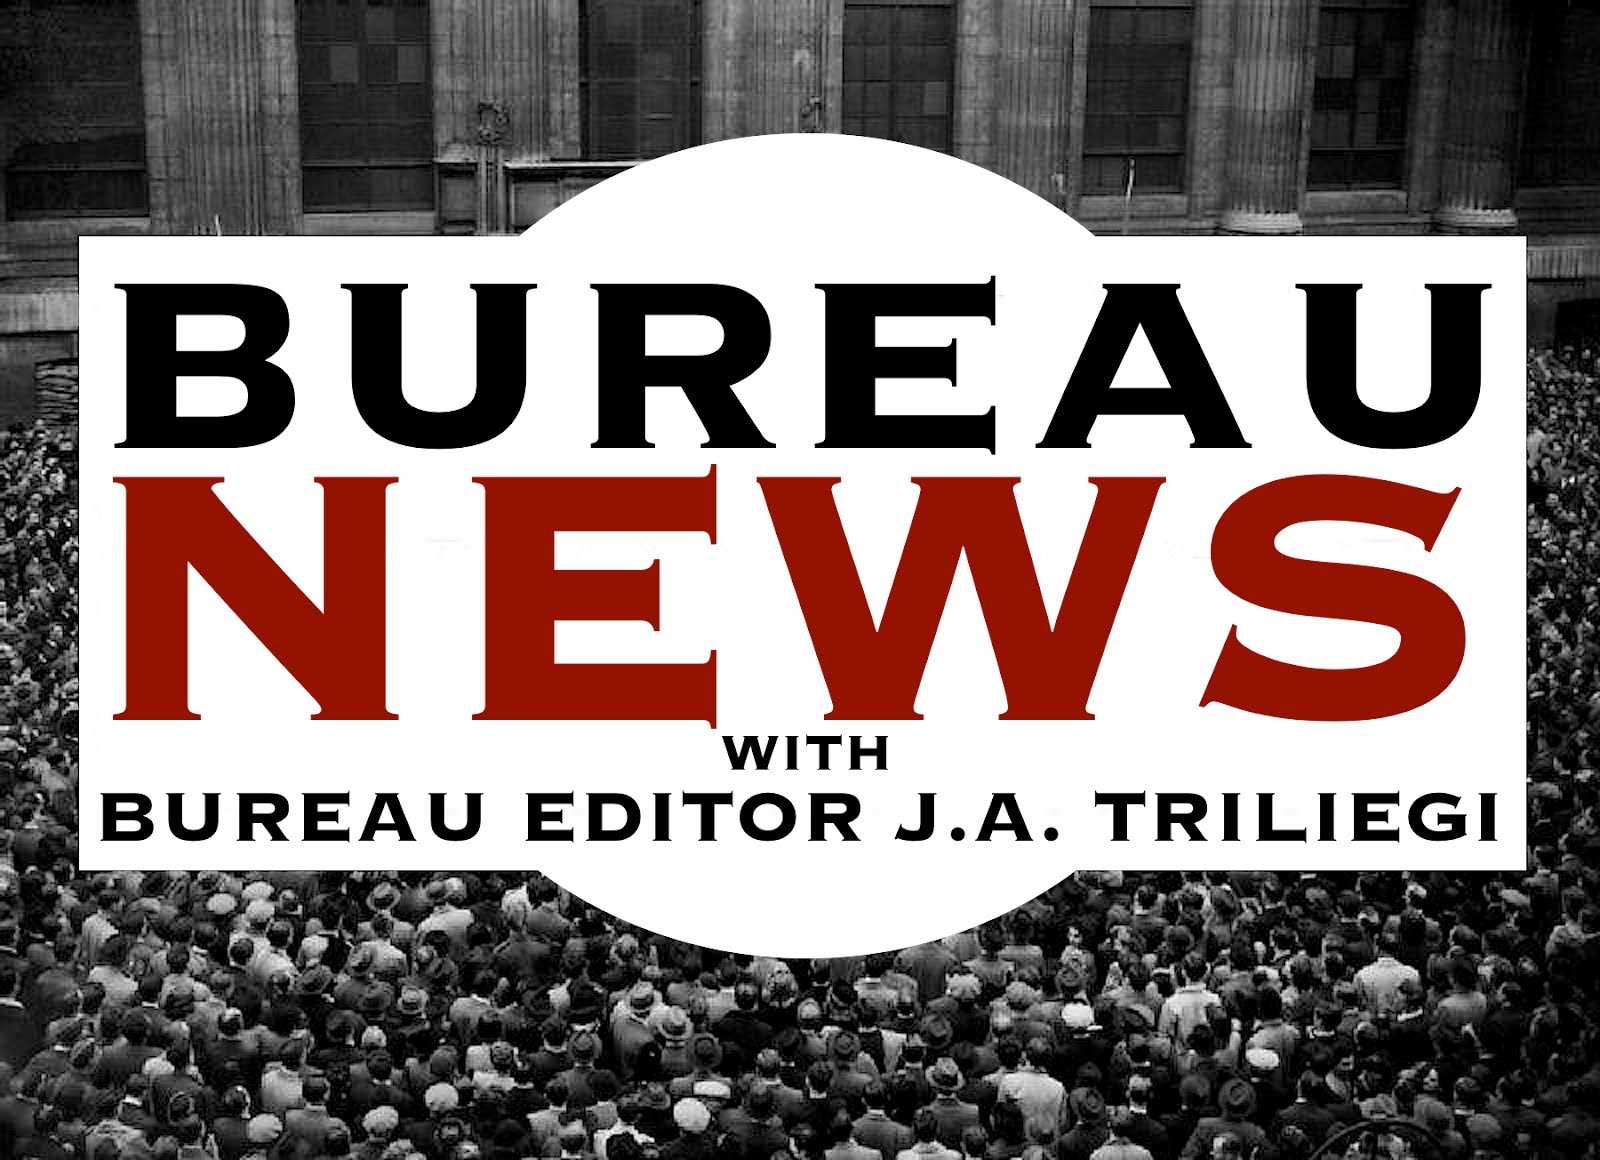 VISIT THE BUREAU NEWS